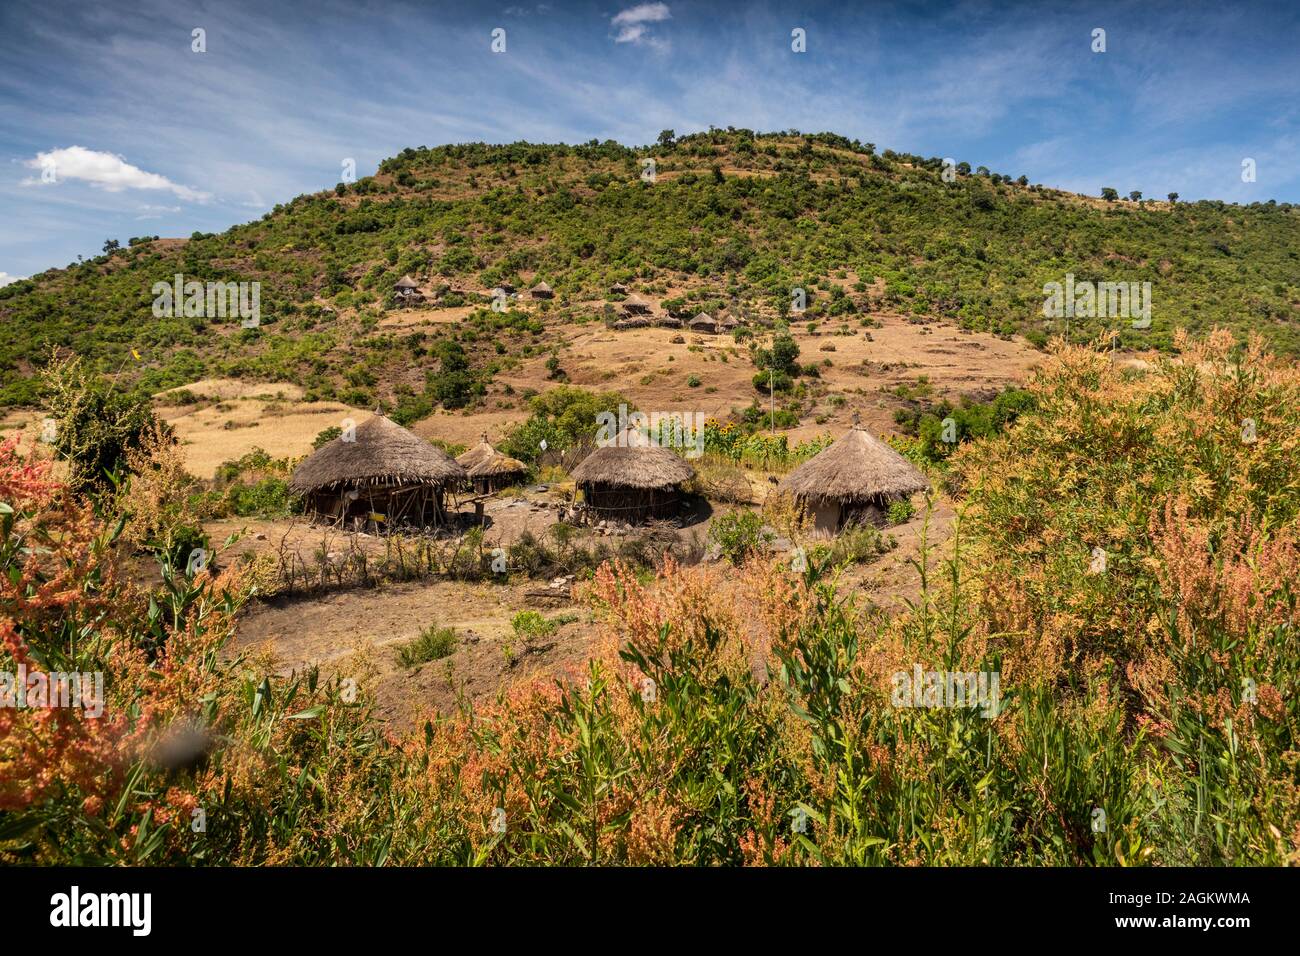 Ethiopia, Amhara Region, Lalibela, Bilbala, traditional circular thatched homes in small agricultural village Stock Photo